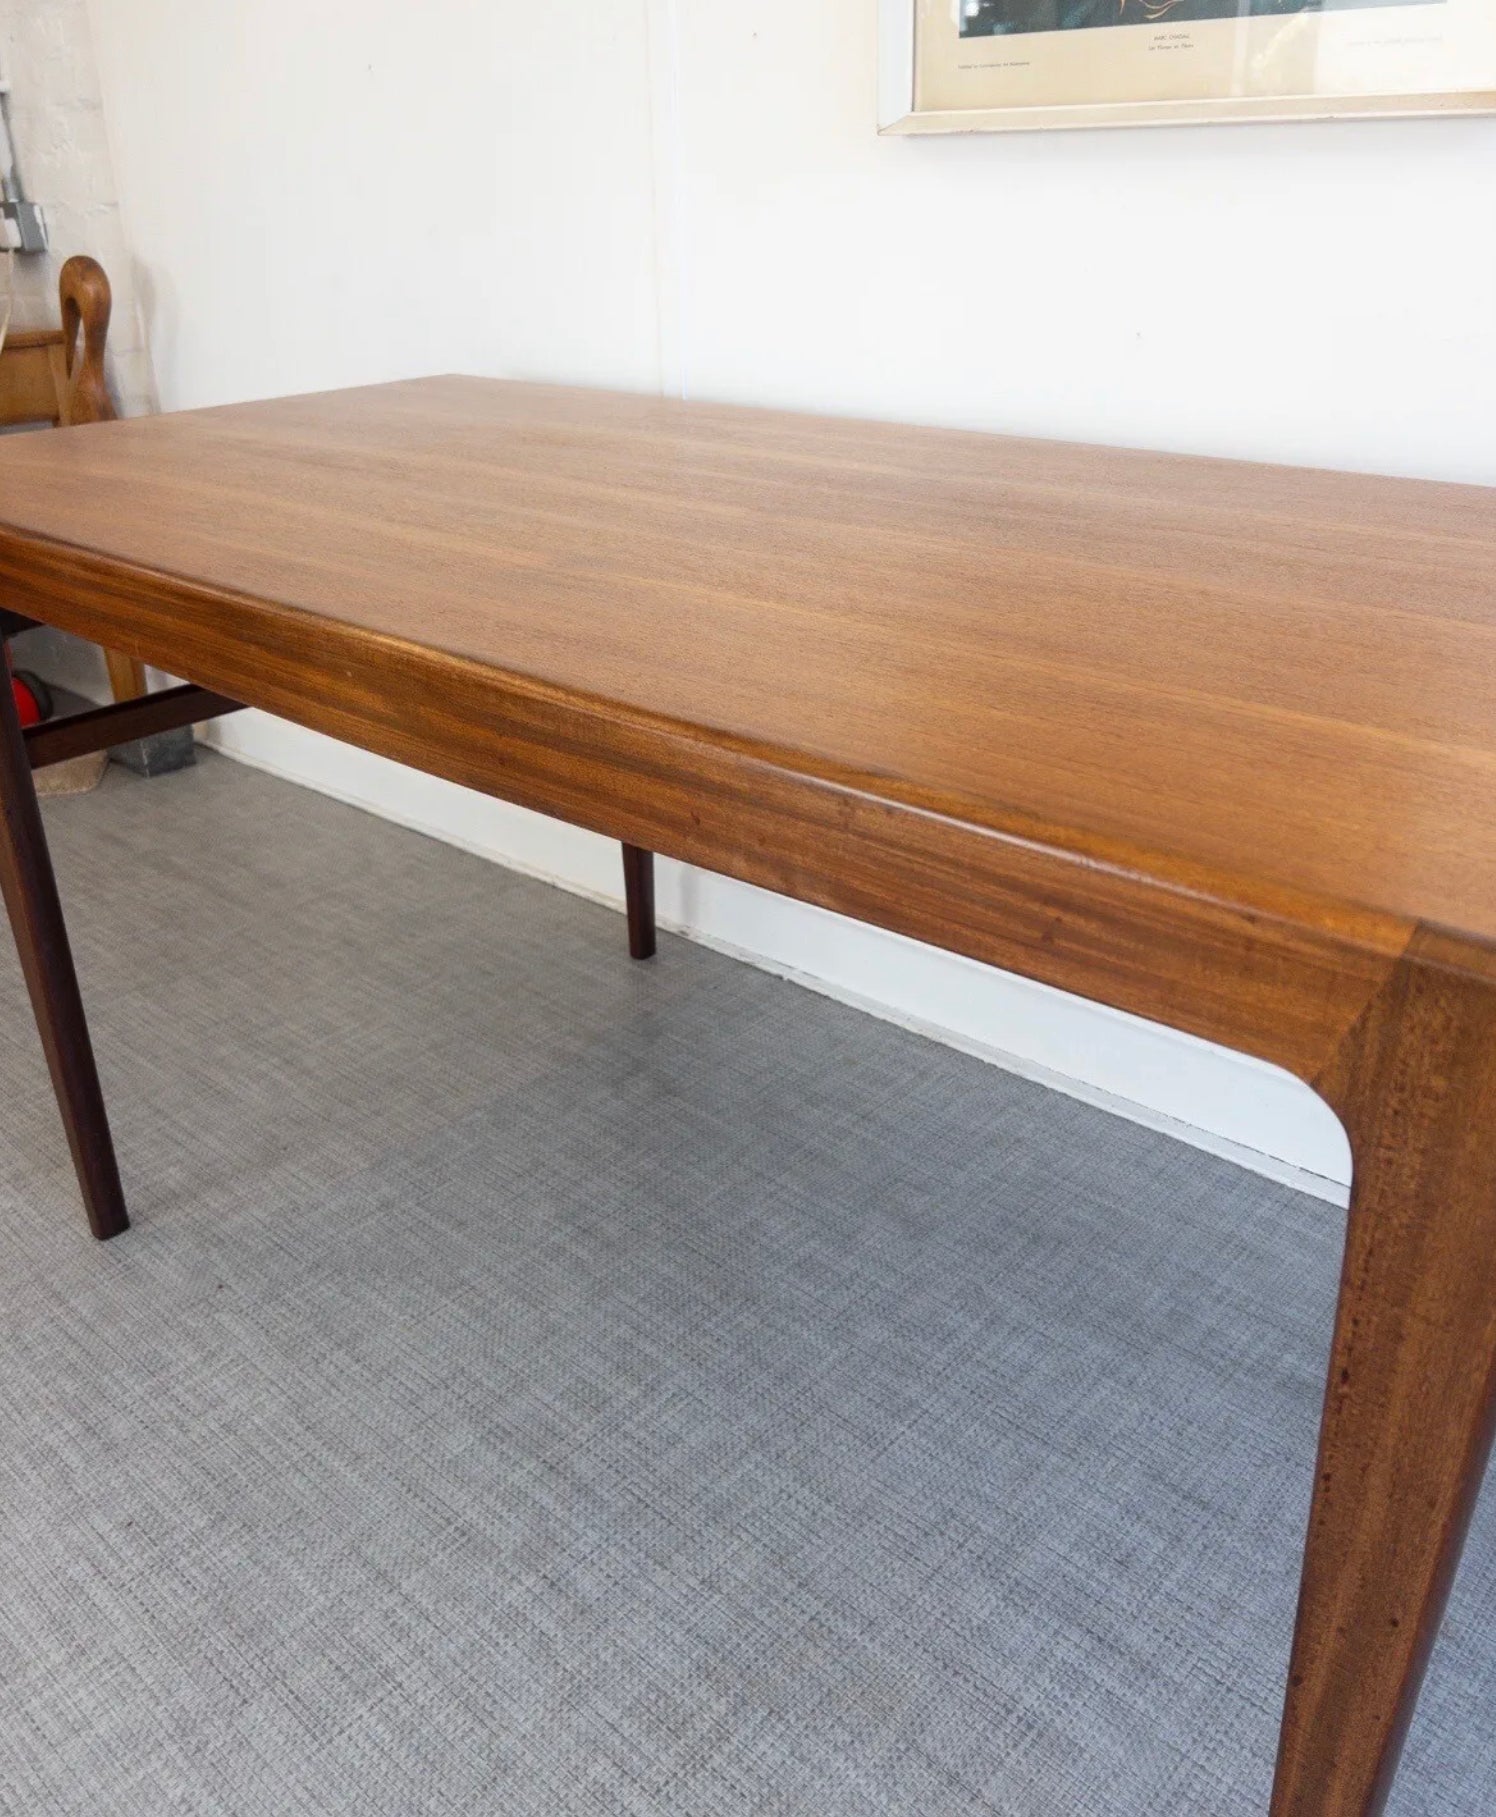 Younger Teak Rectangle Plank Dining Table Fonseca Range Vintage Mid Century Furniture - teakyfinders